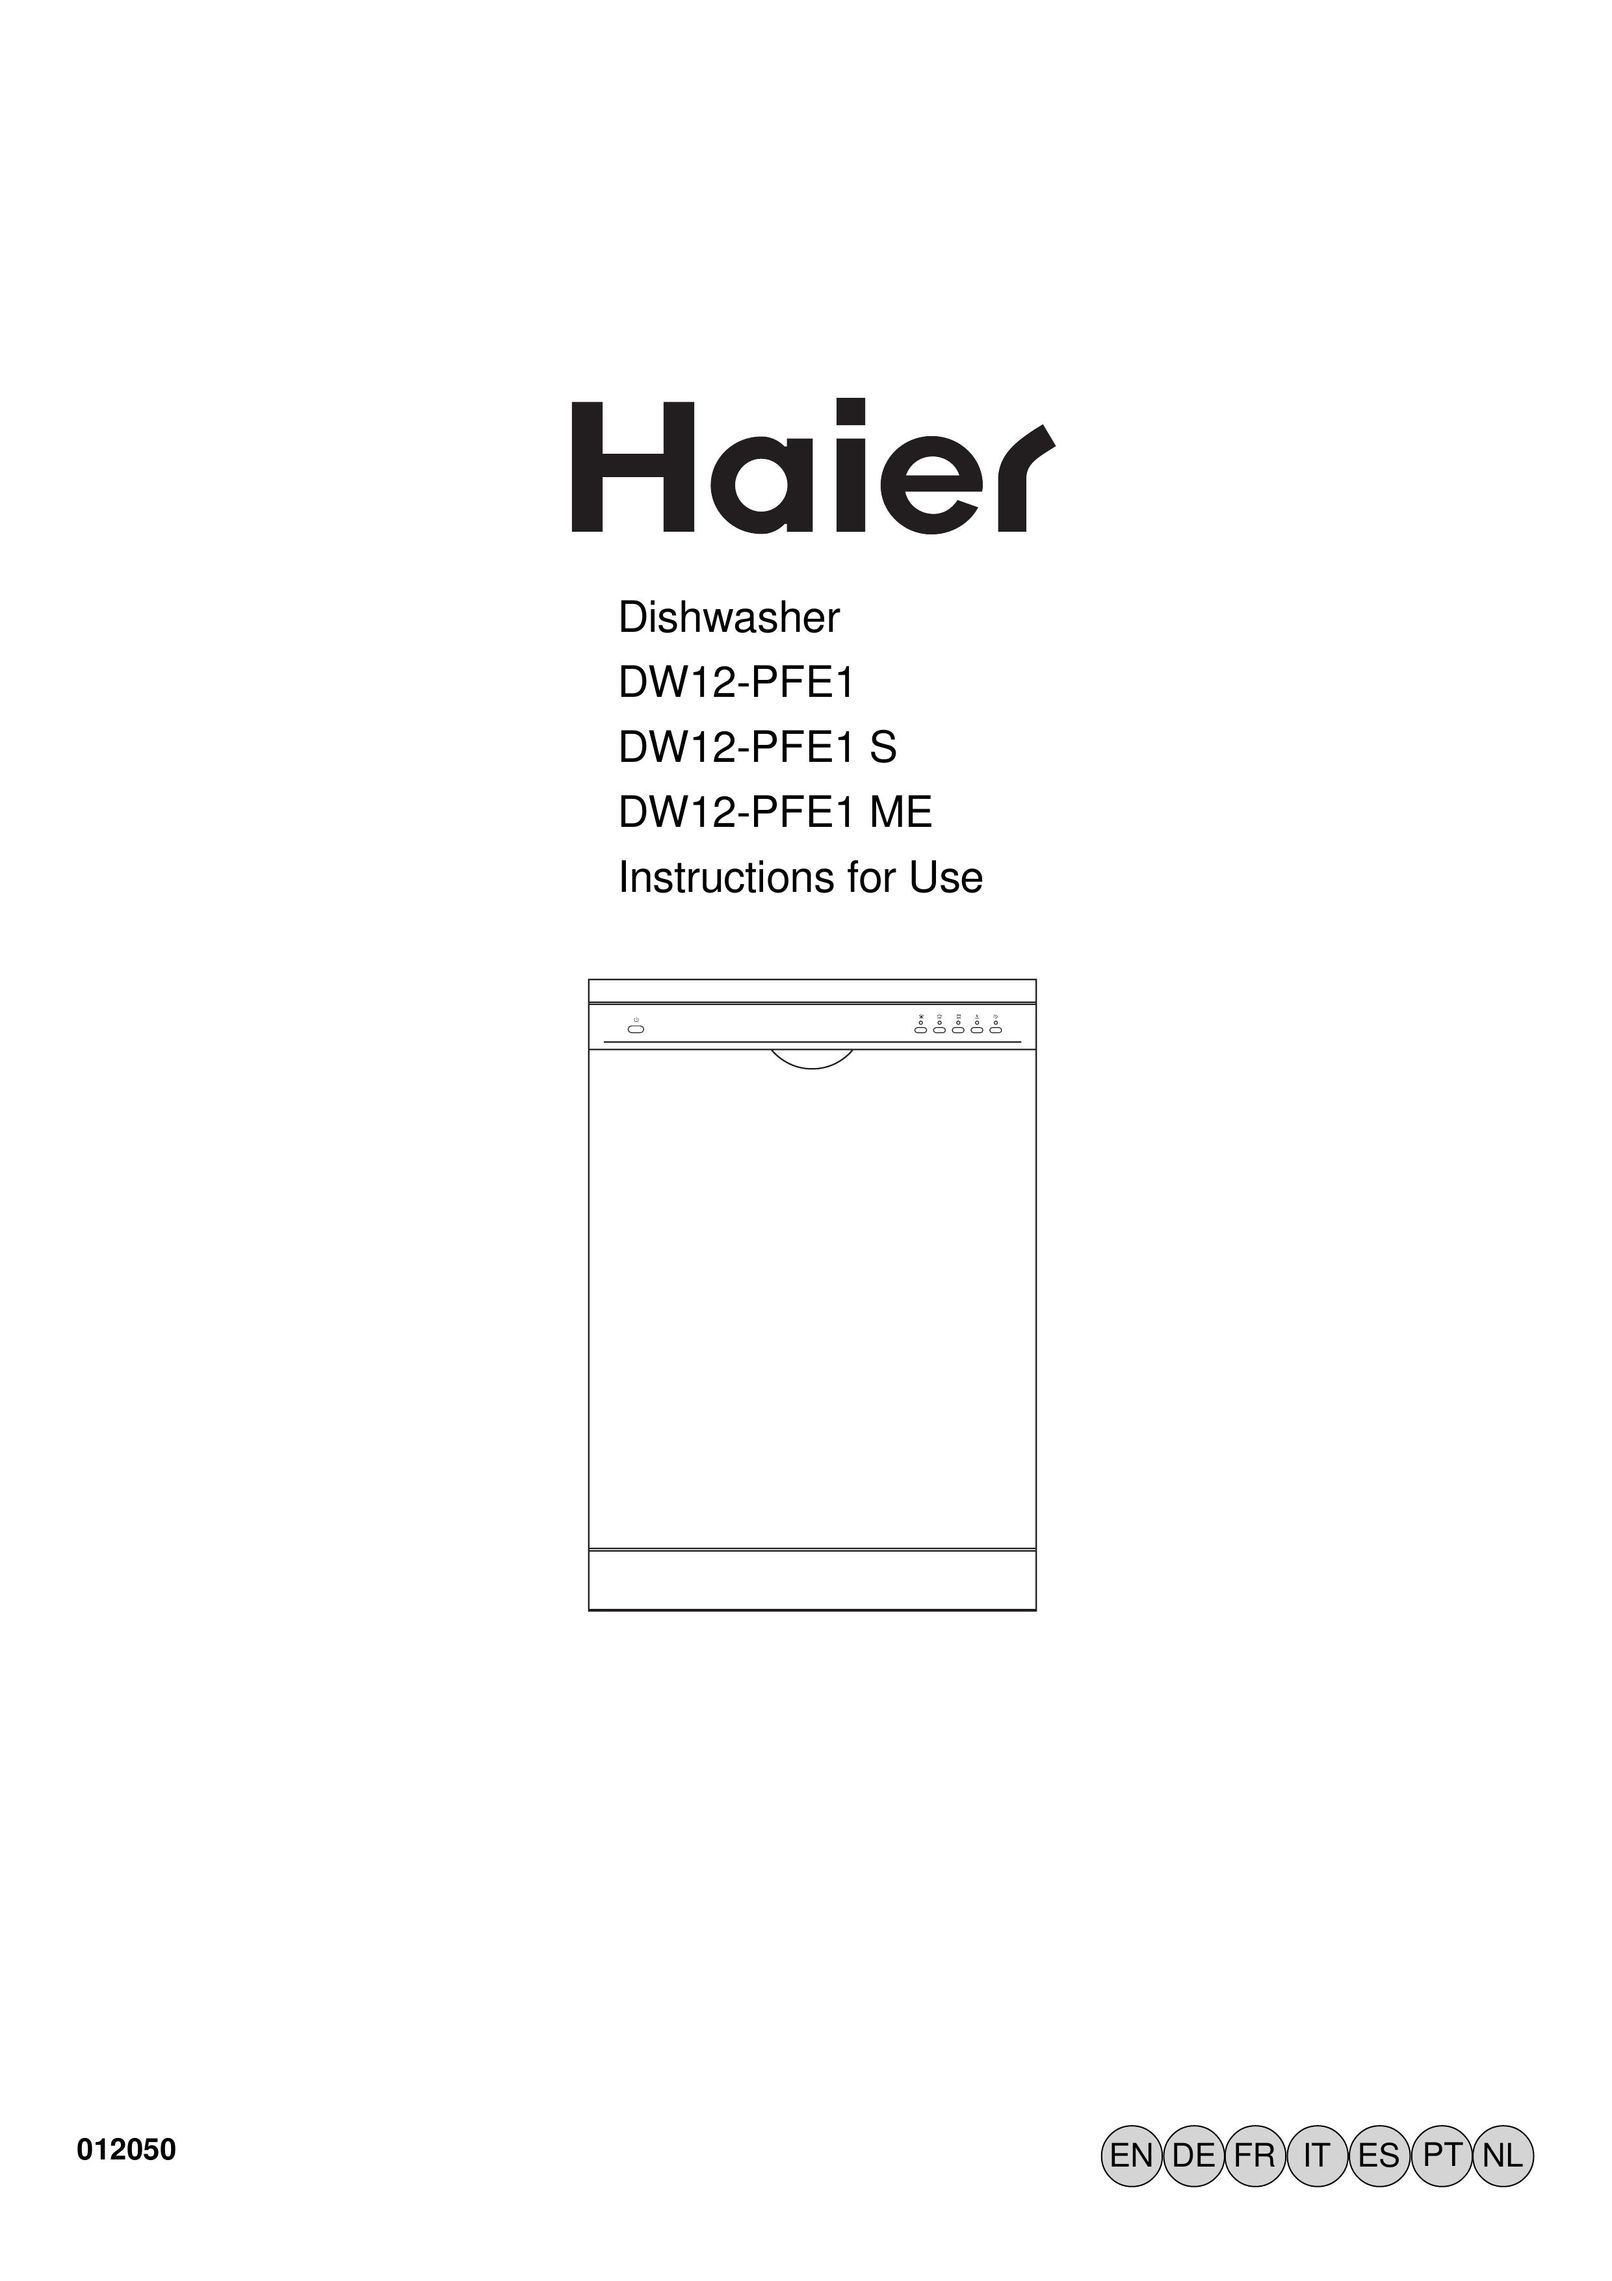 Haier DW12-PFE1 S Dishwasher User Manual